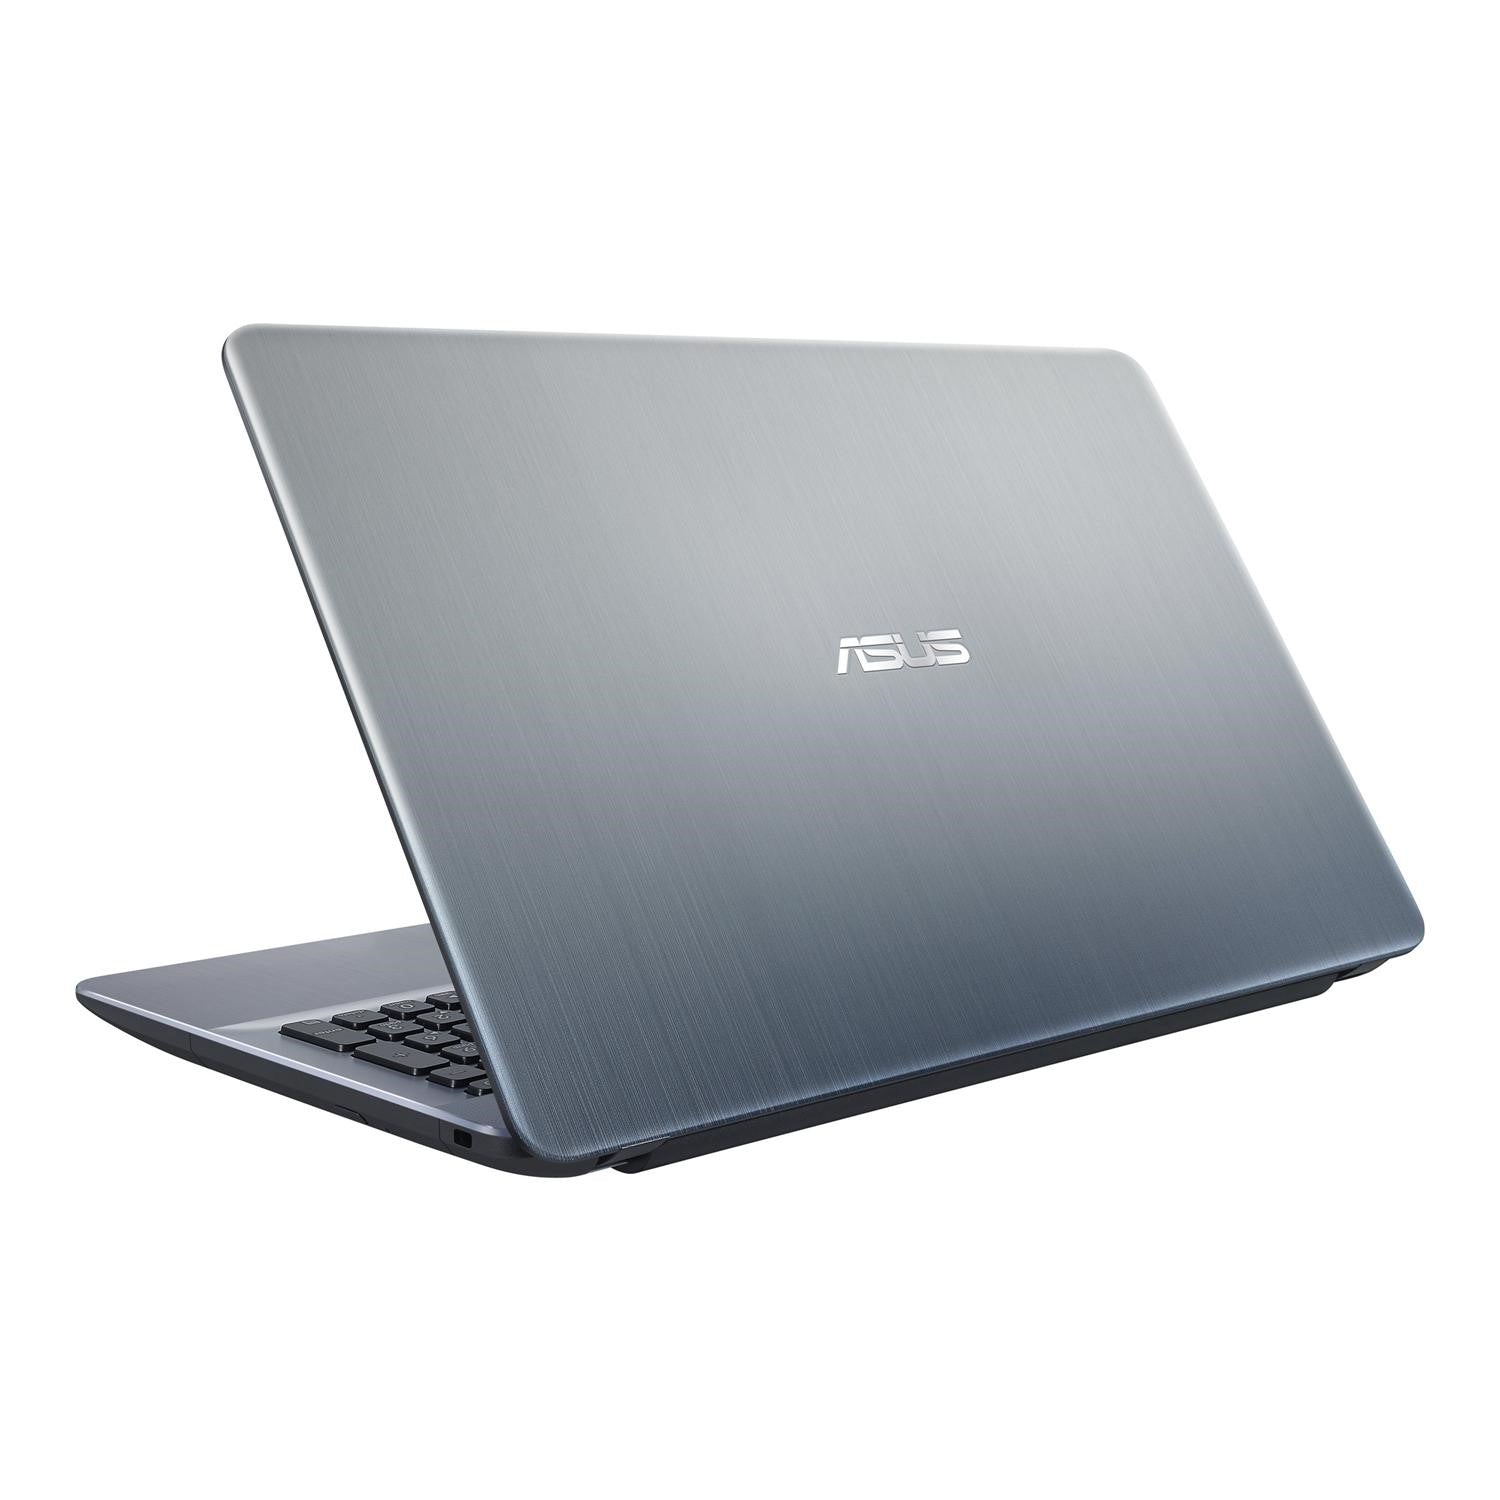 ASUS VivoBook X541UA-XX202T Laptop Intel Core i5-6198DU 8GB RAM 1TB HDD 15.6" - Silver - Refurbished Good